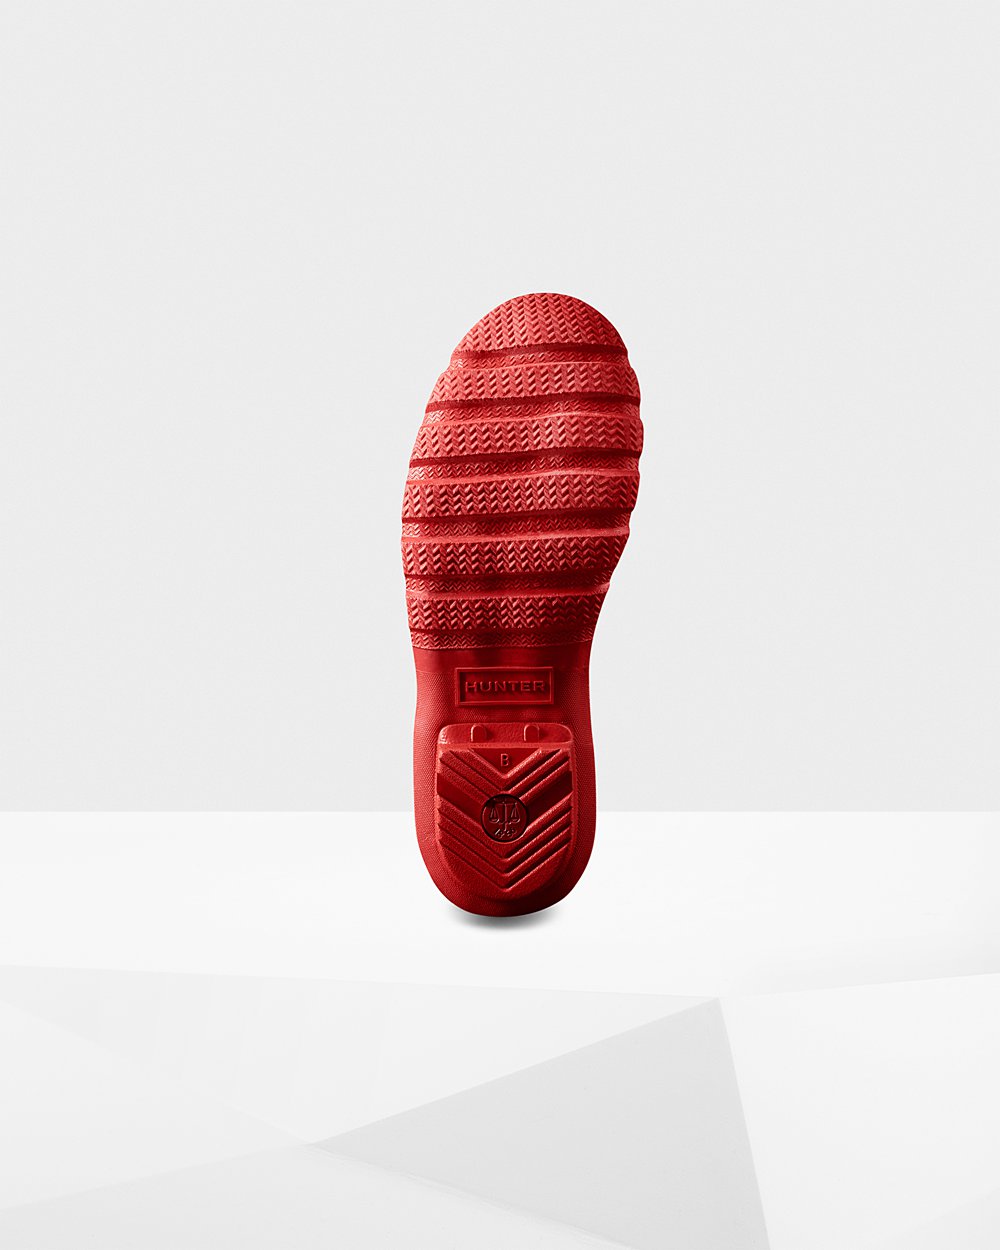 Womens Short Rain Boots - Hunter Original Nebula (78AEFMBGS) - Red